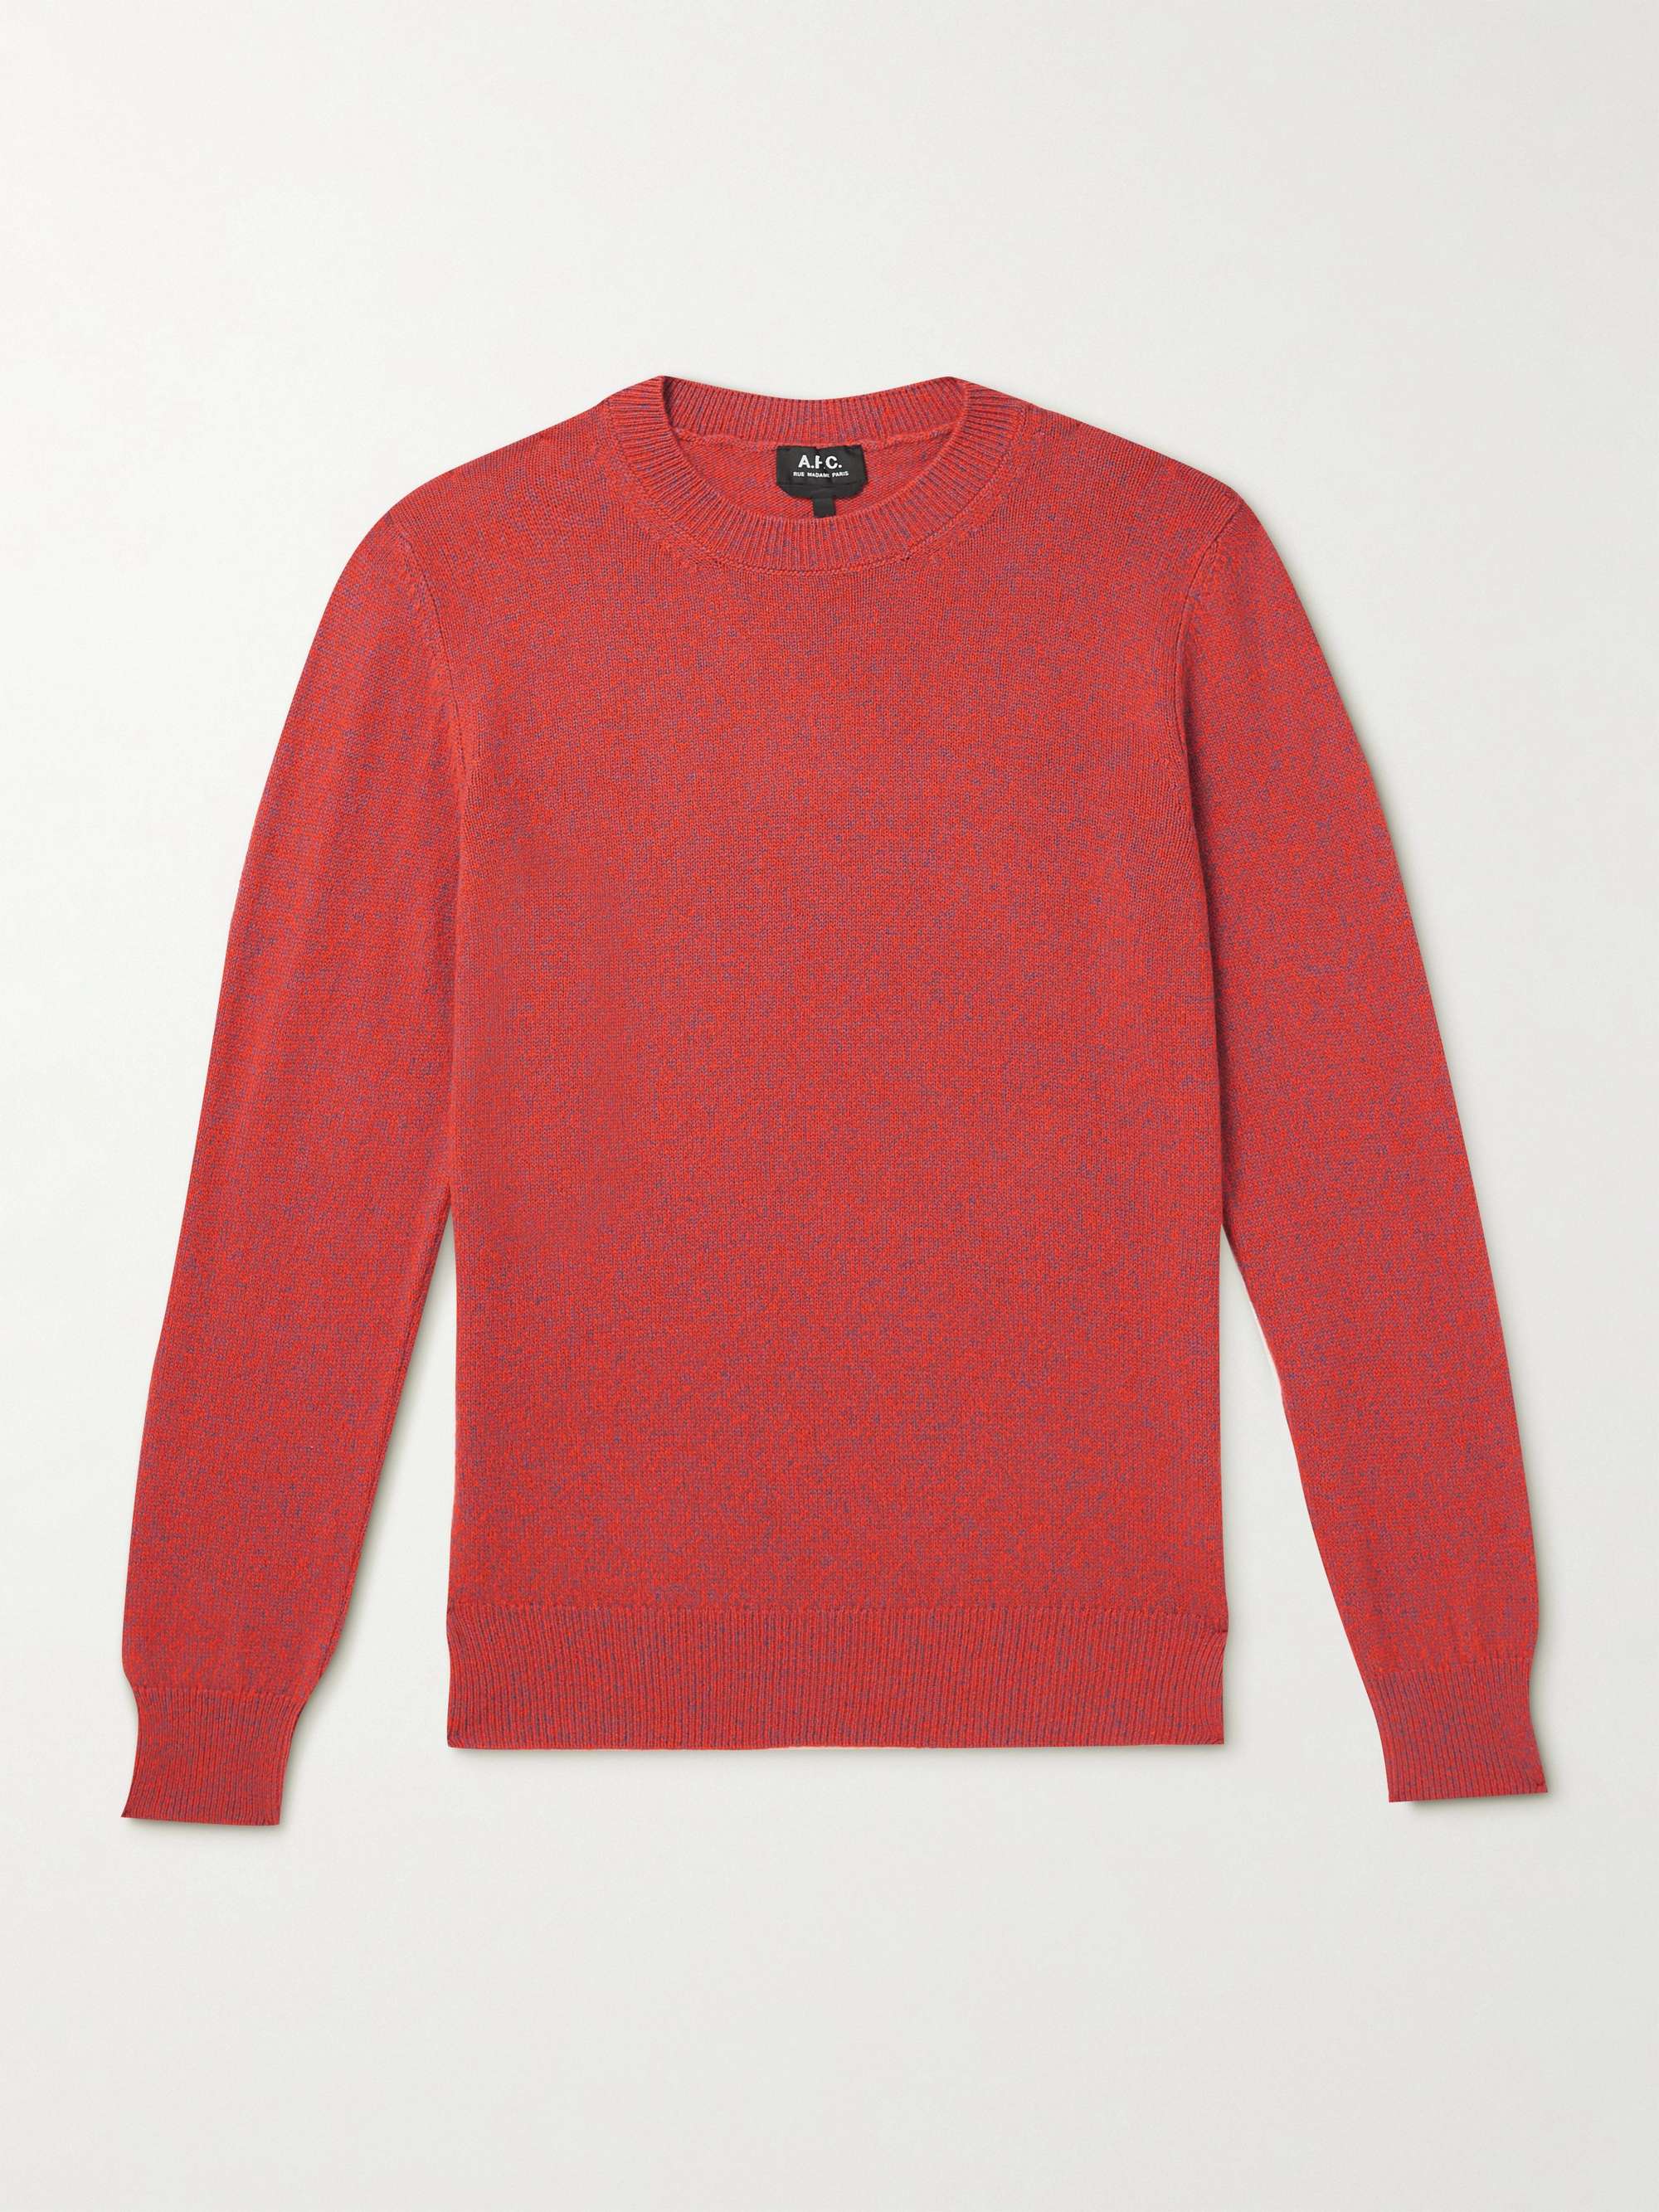 A.P.C. Benoit Wool and Cotton-Blend Sweater